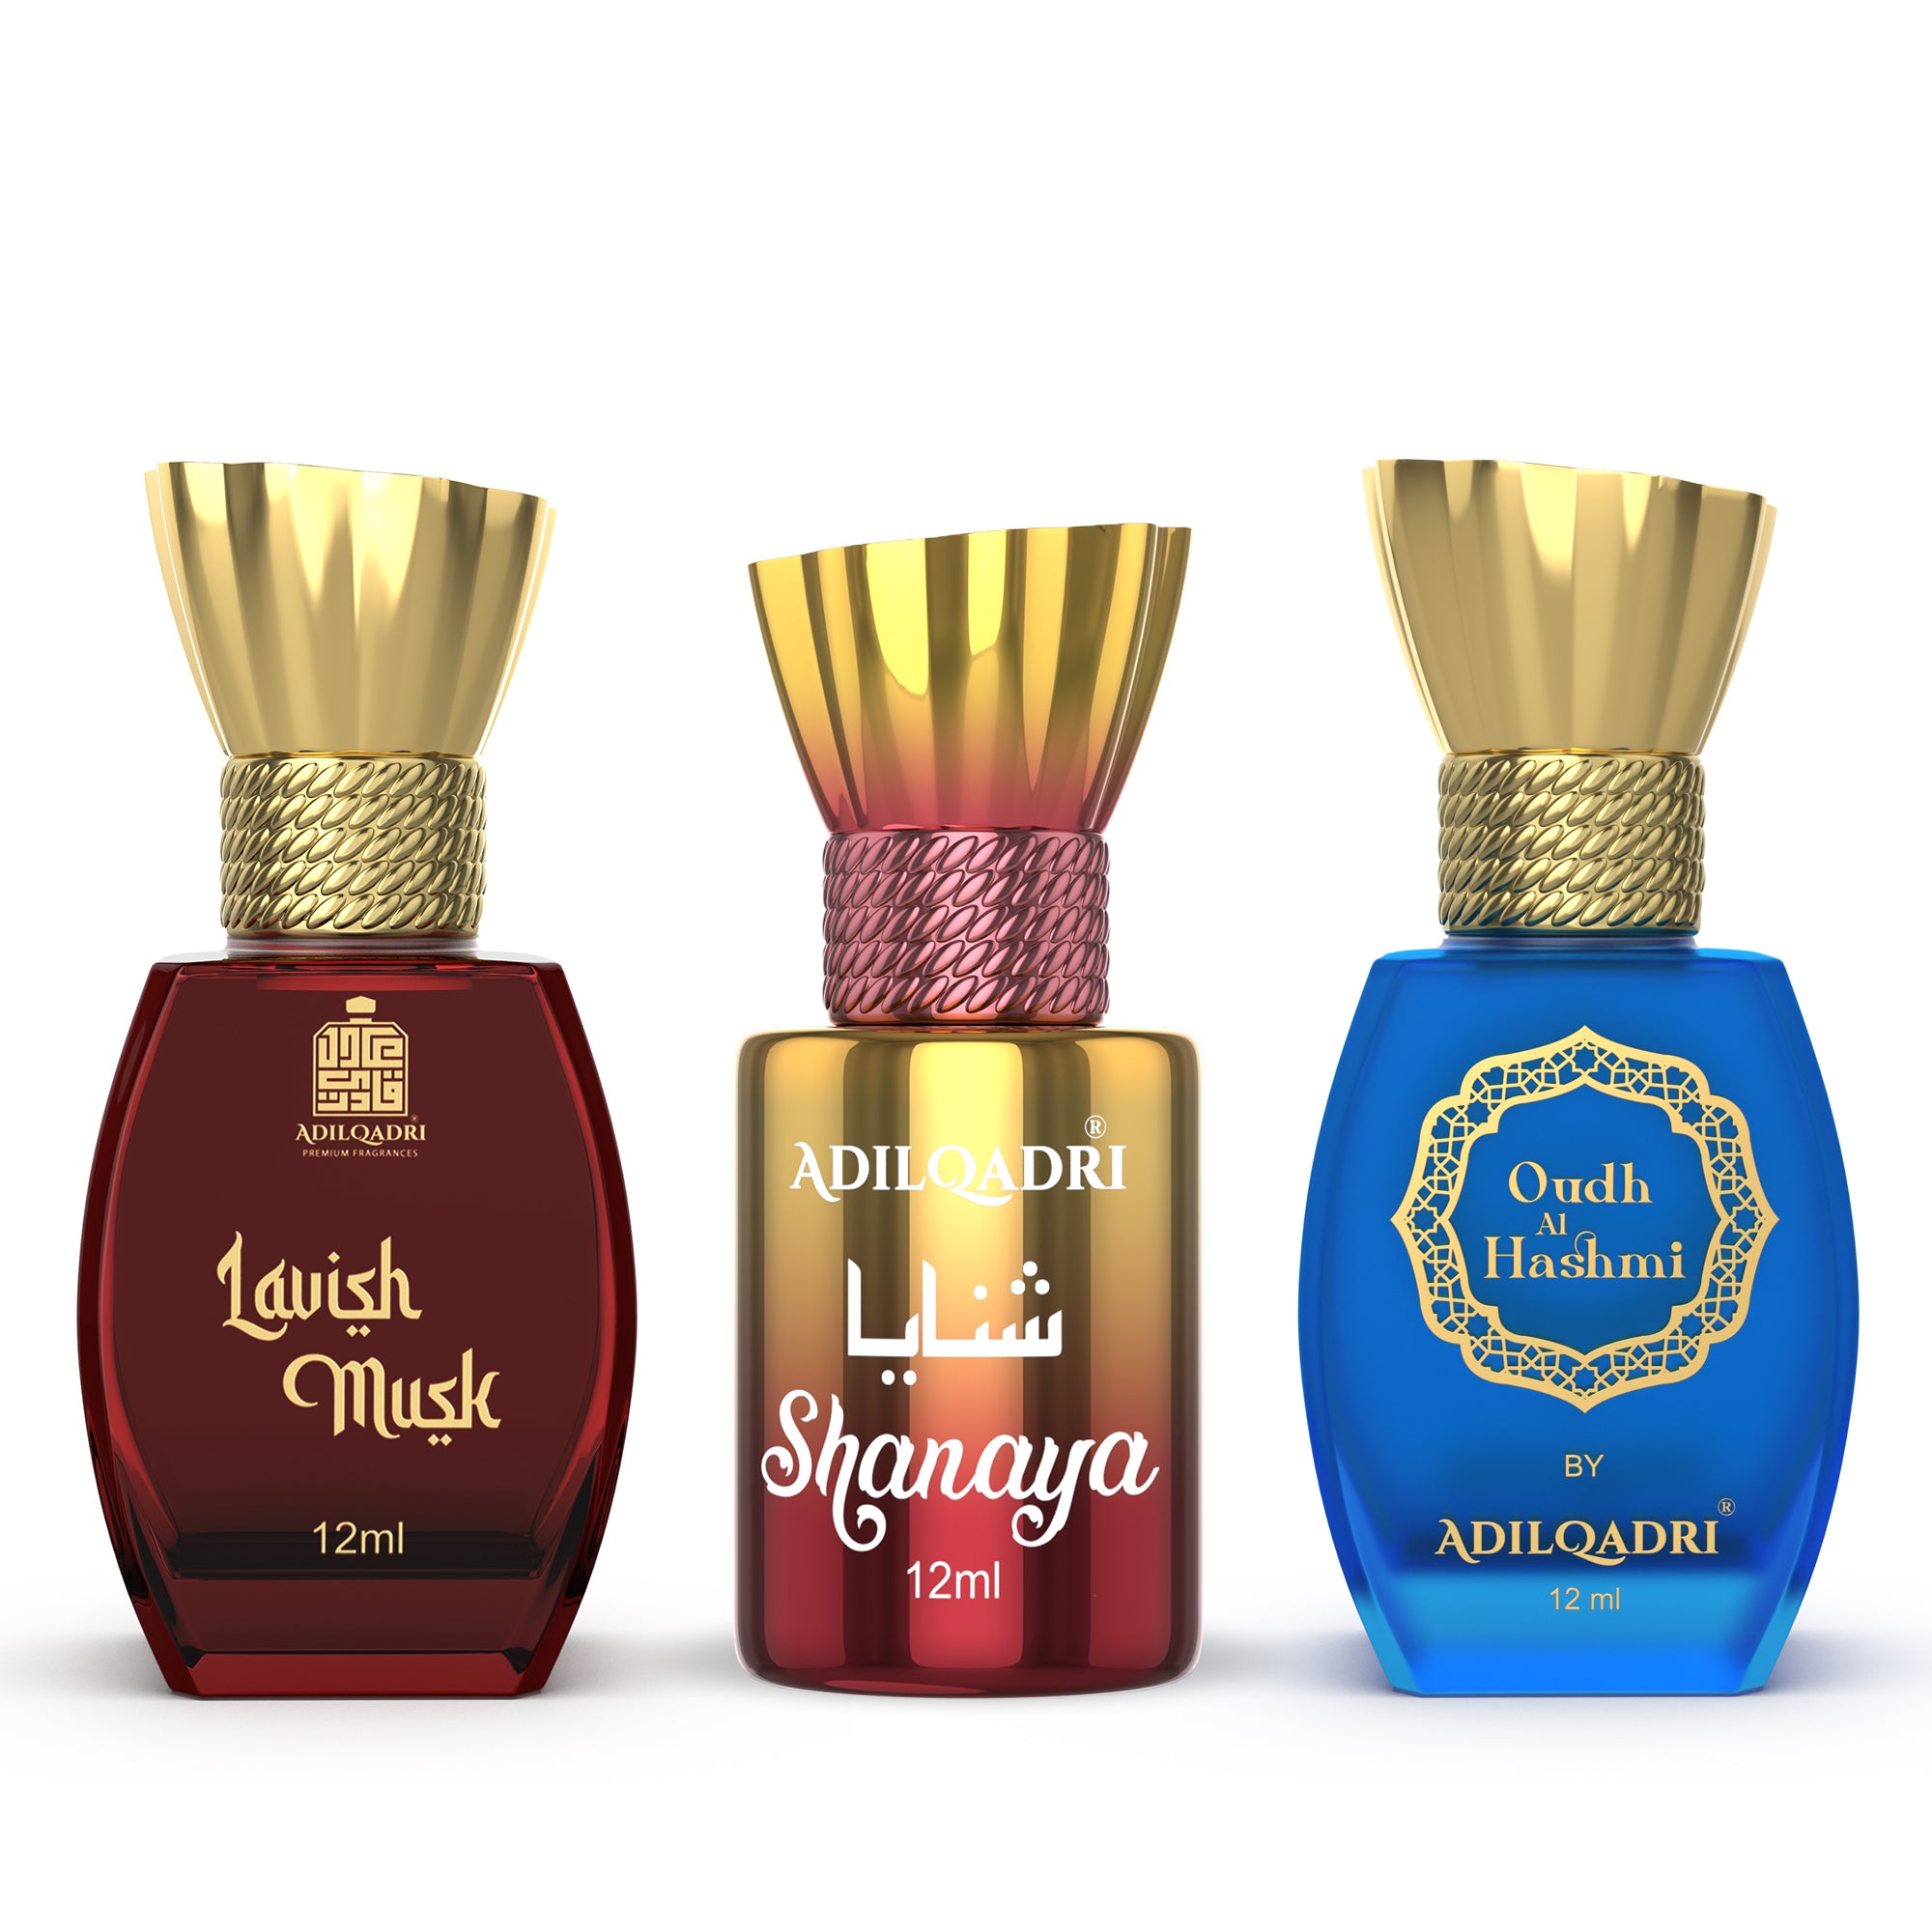 Oudh Al Hashmi Luxury Attar Perfume